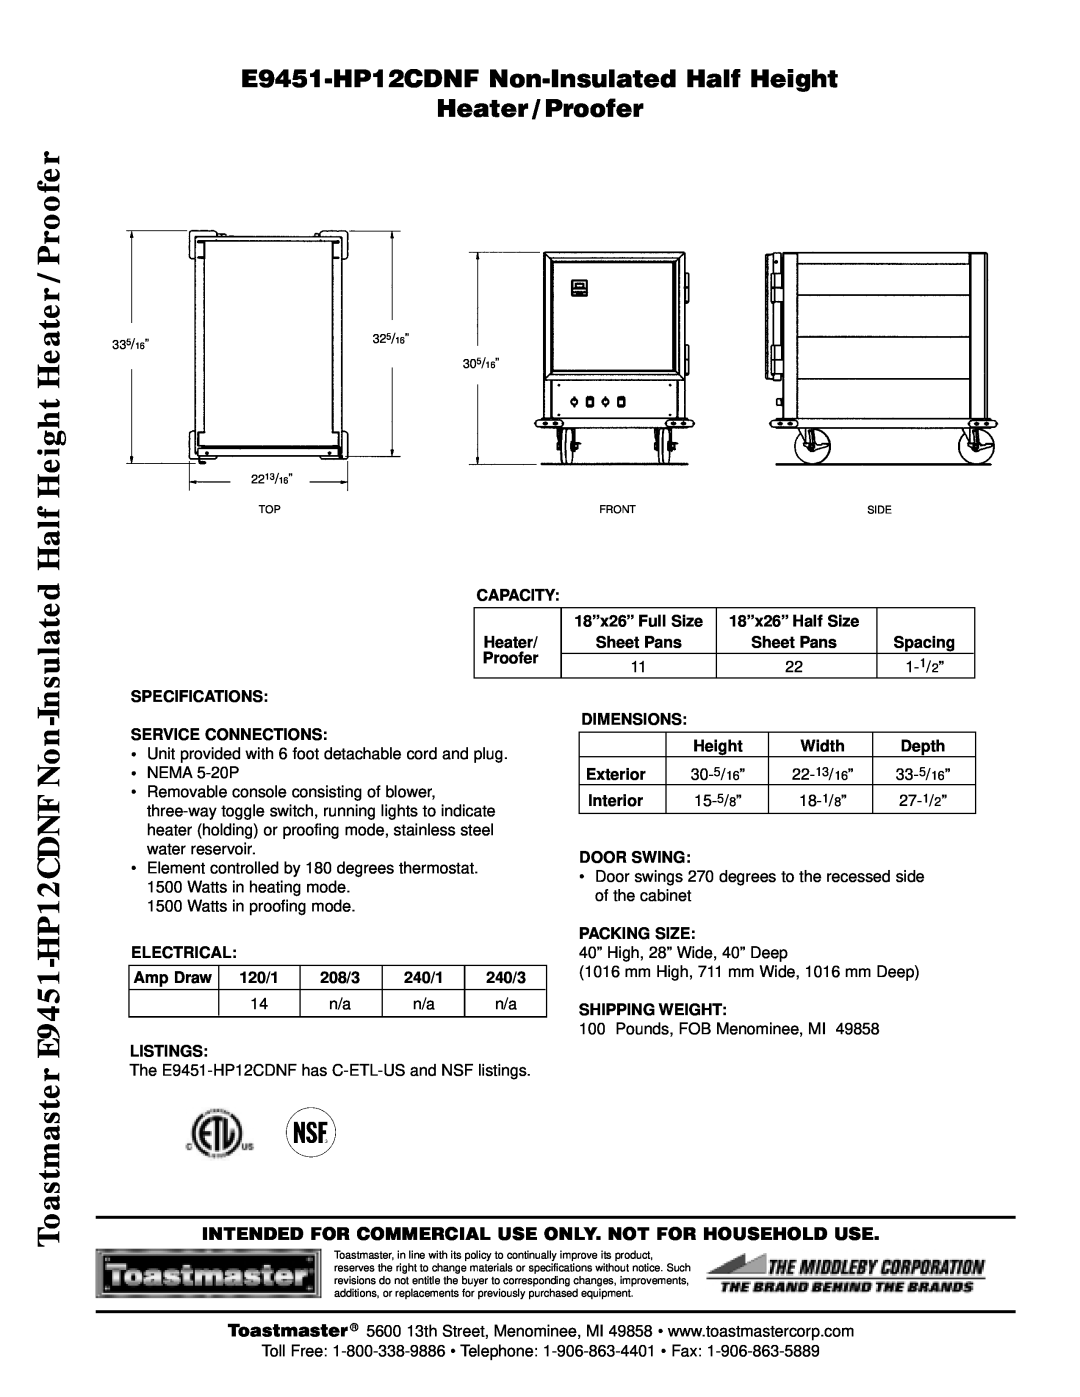 Toastmaster manual E9451-HP12CDNF Non-InsulatedHalf Height, Heater / Proofer 